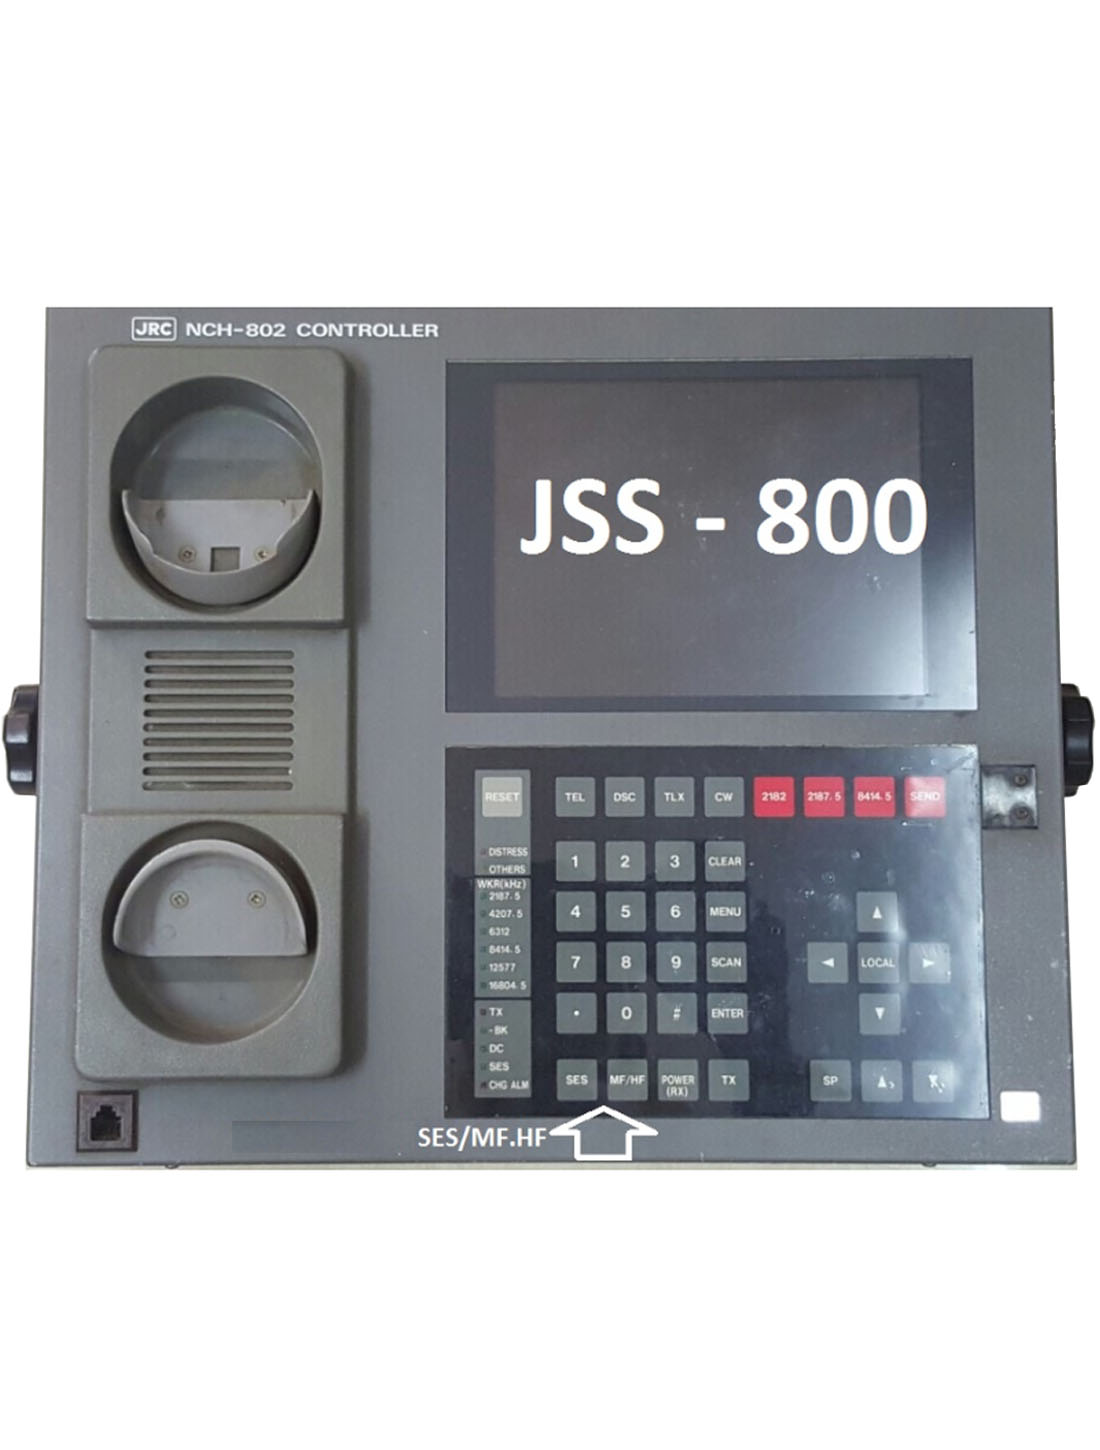 jss-800-nch-802